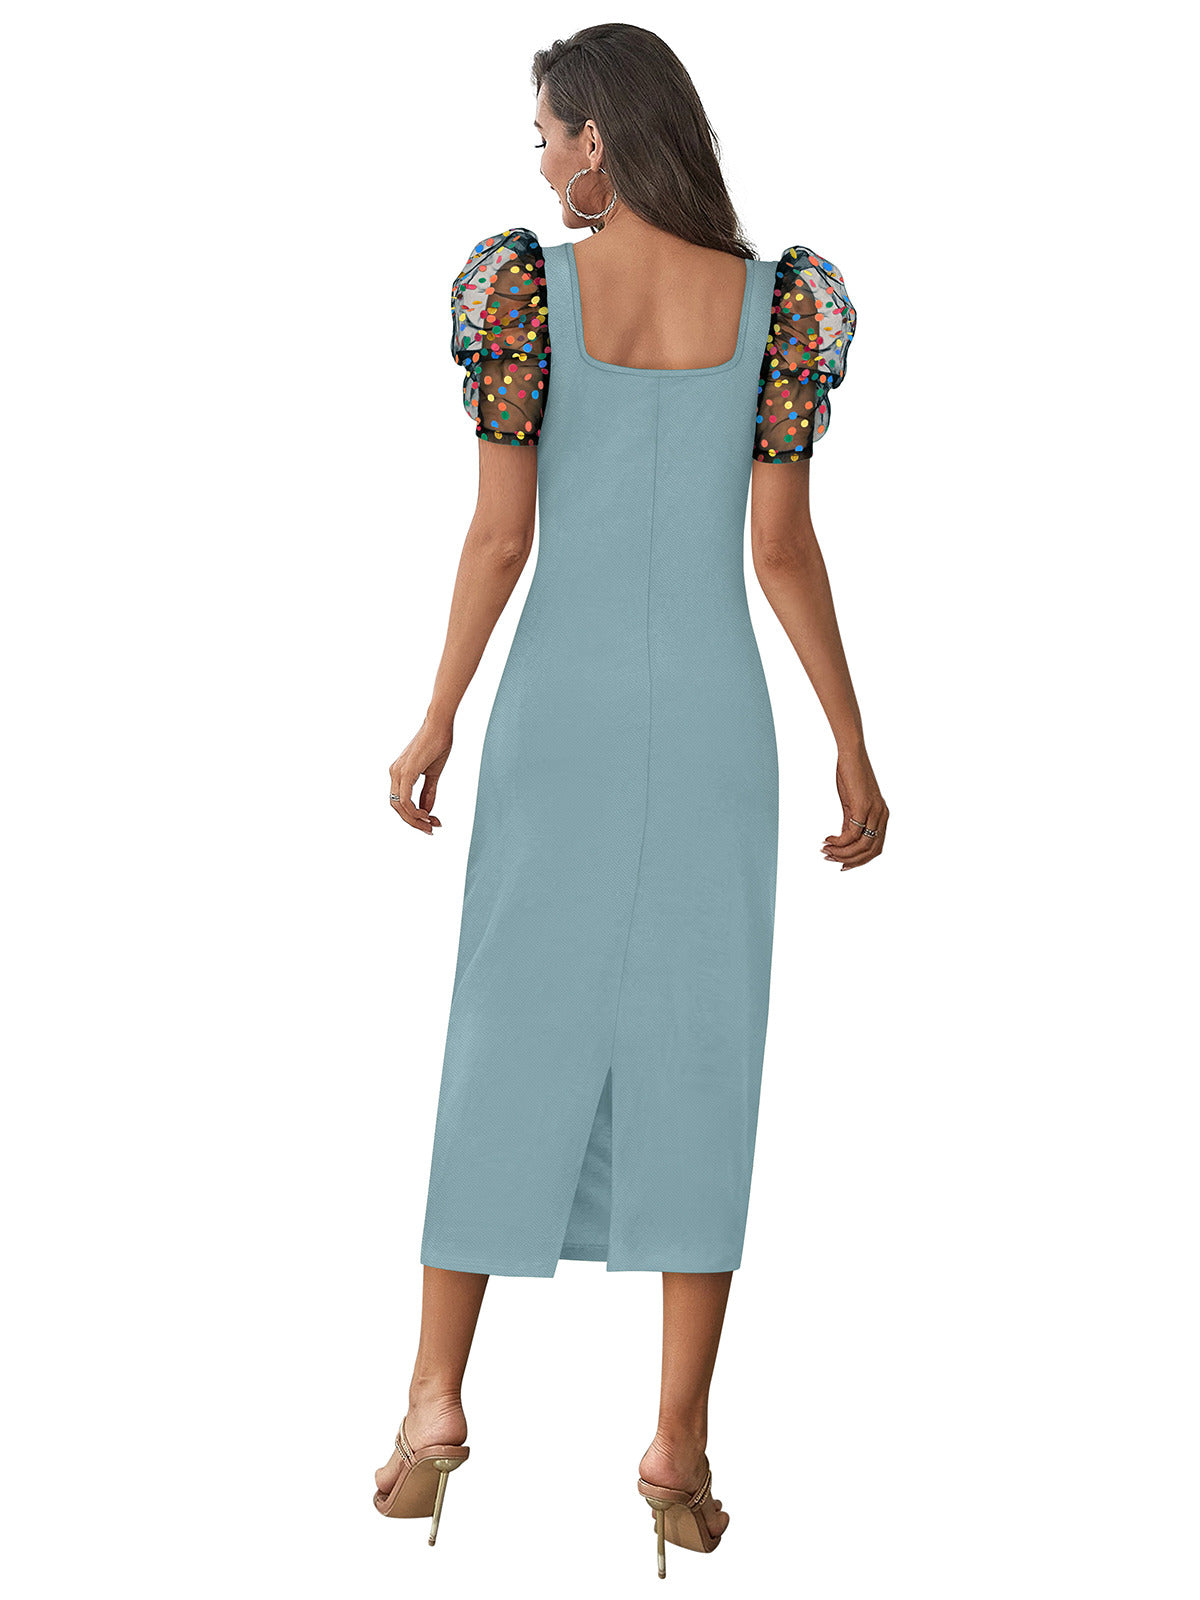 Odette Blue Bodycon Knit Fabric Dress For Women